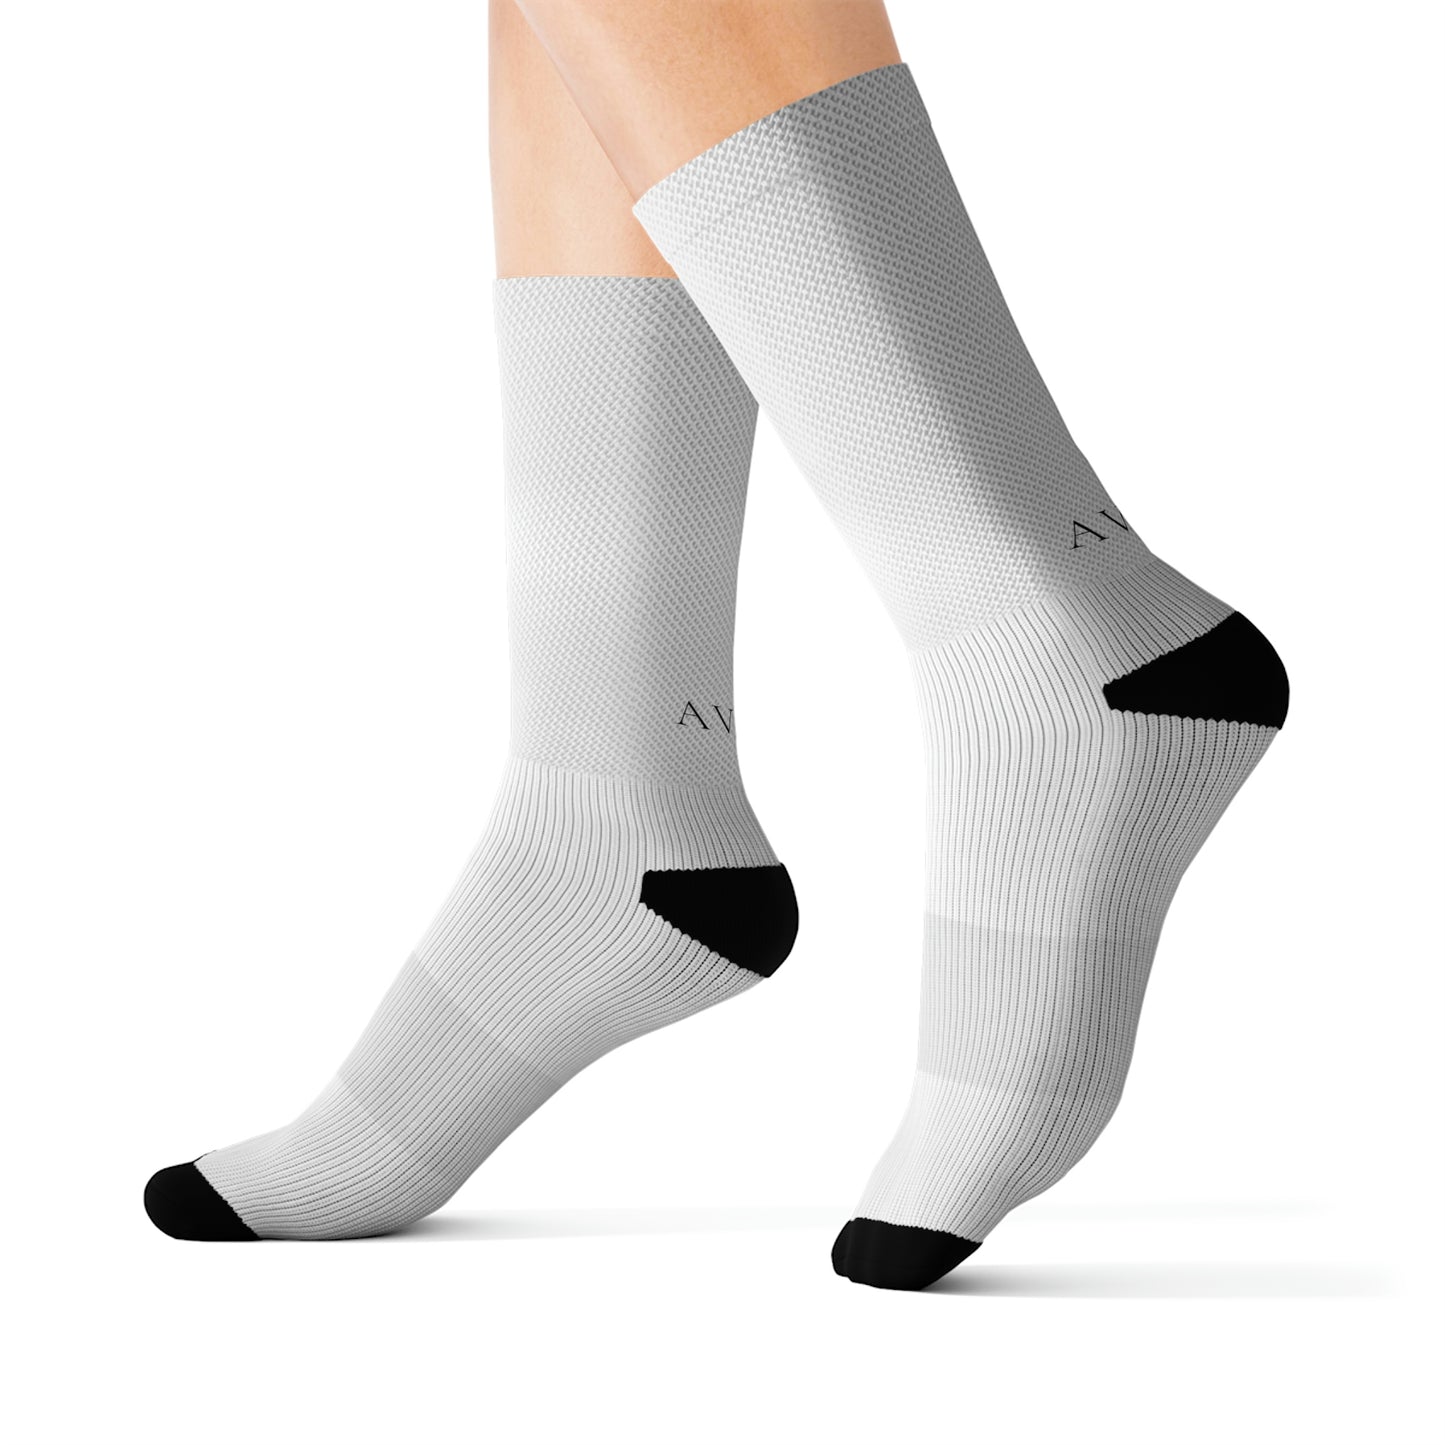 Sublimation Socks with "AVIONY" LOGO